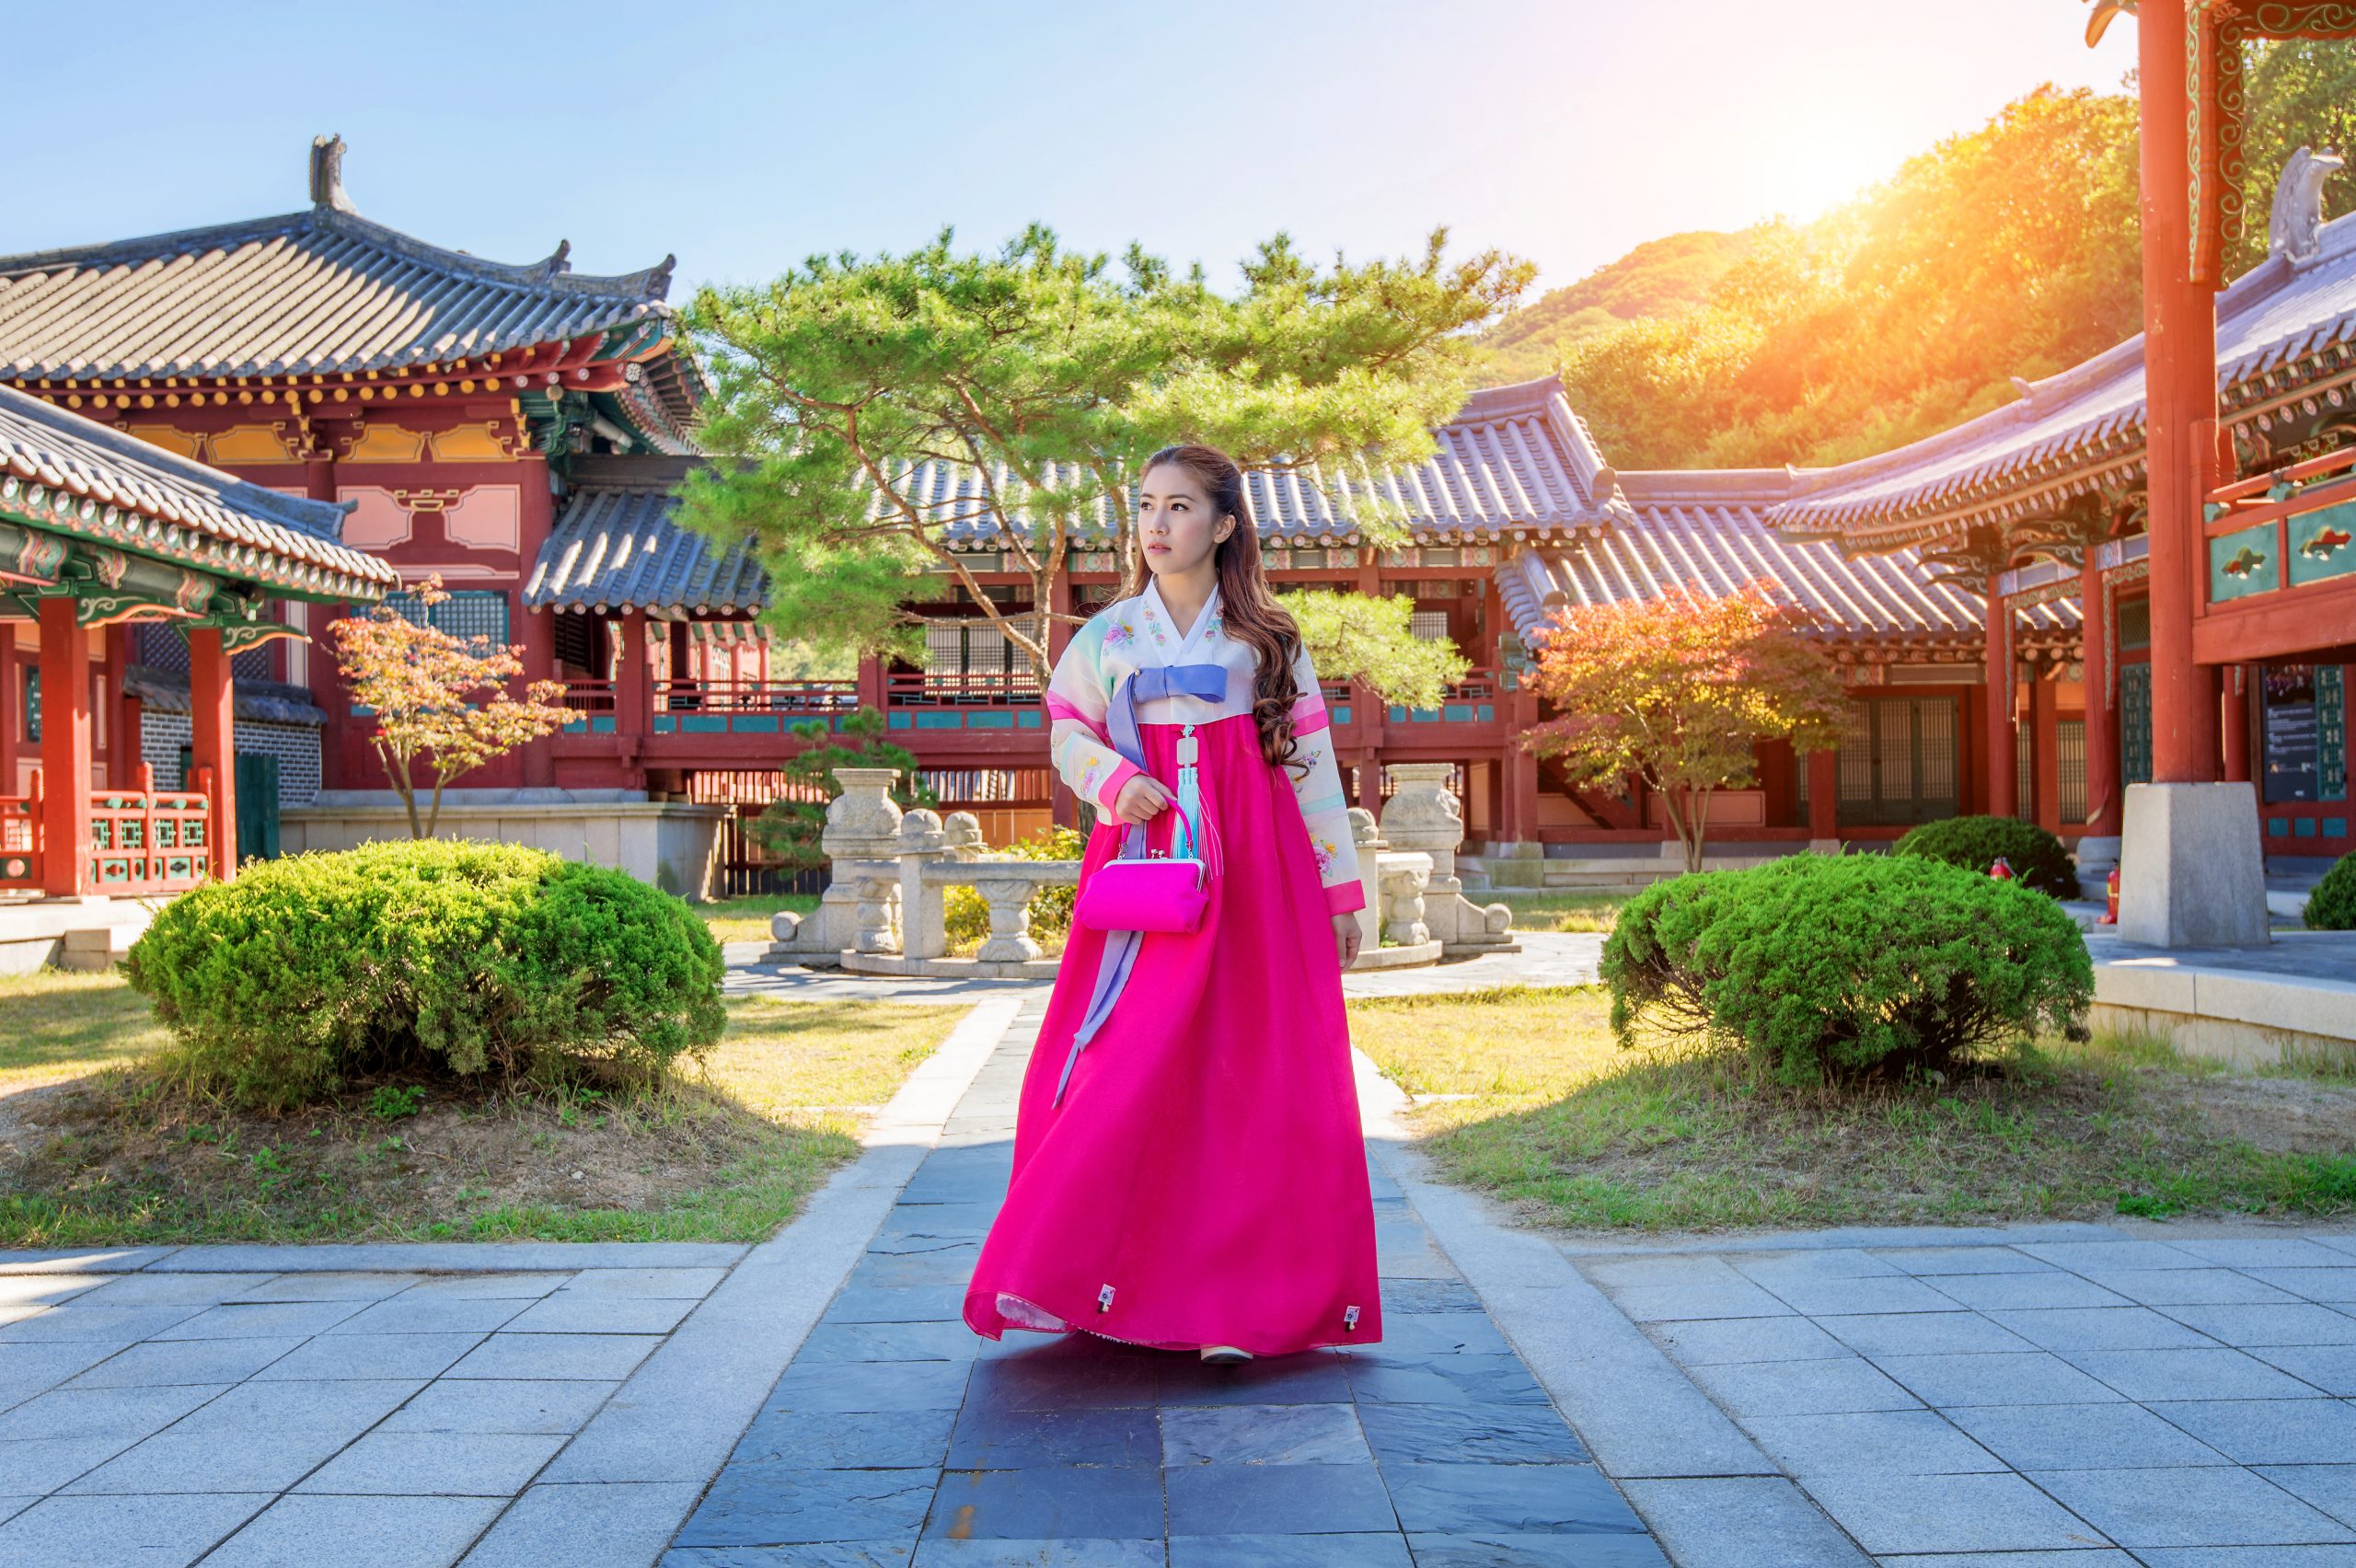 Woman with Hanbok in Gyeongbokgung,the traditional Korean dress.